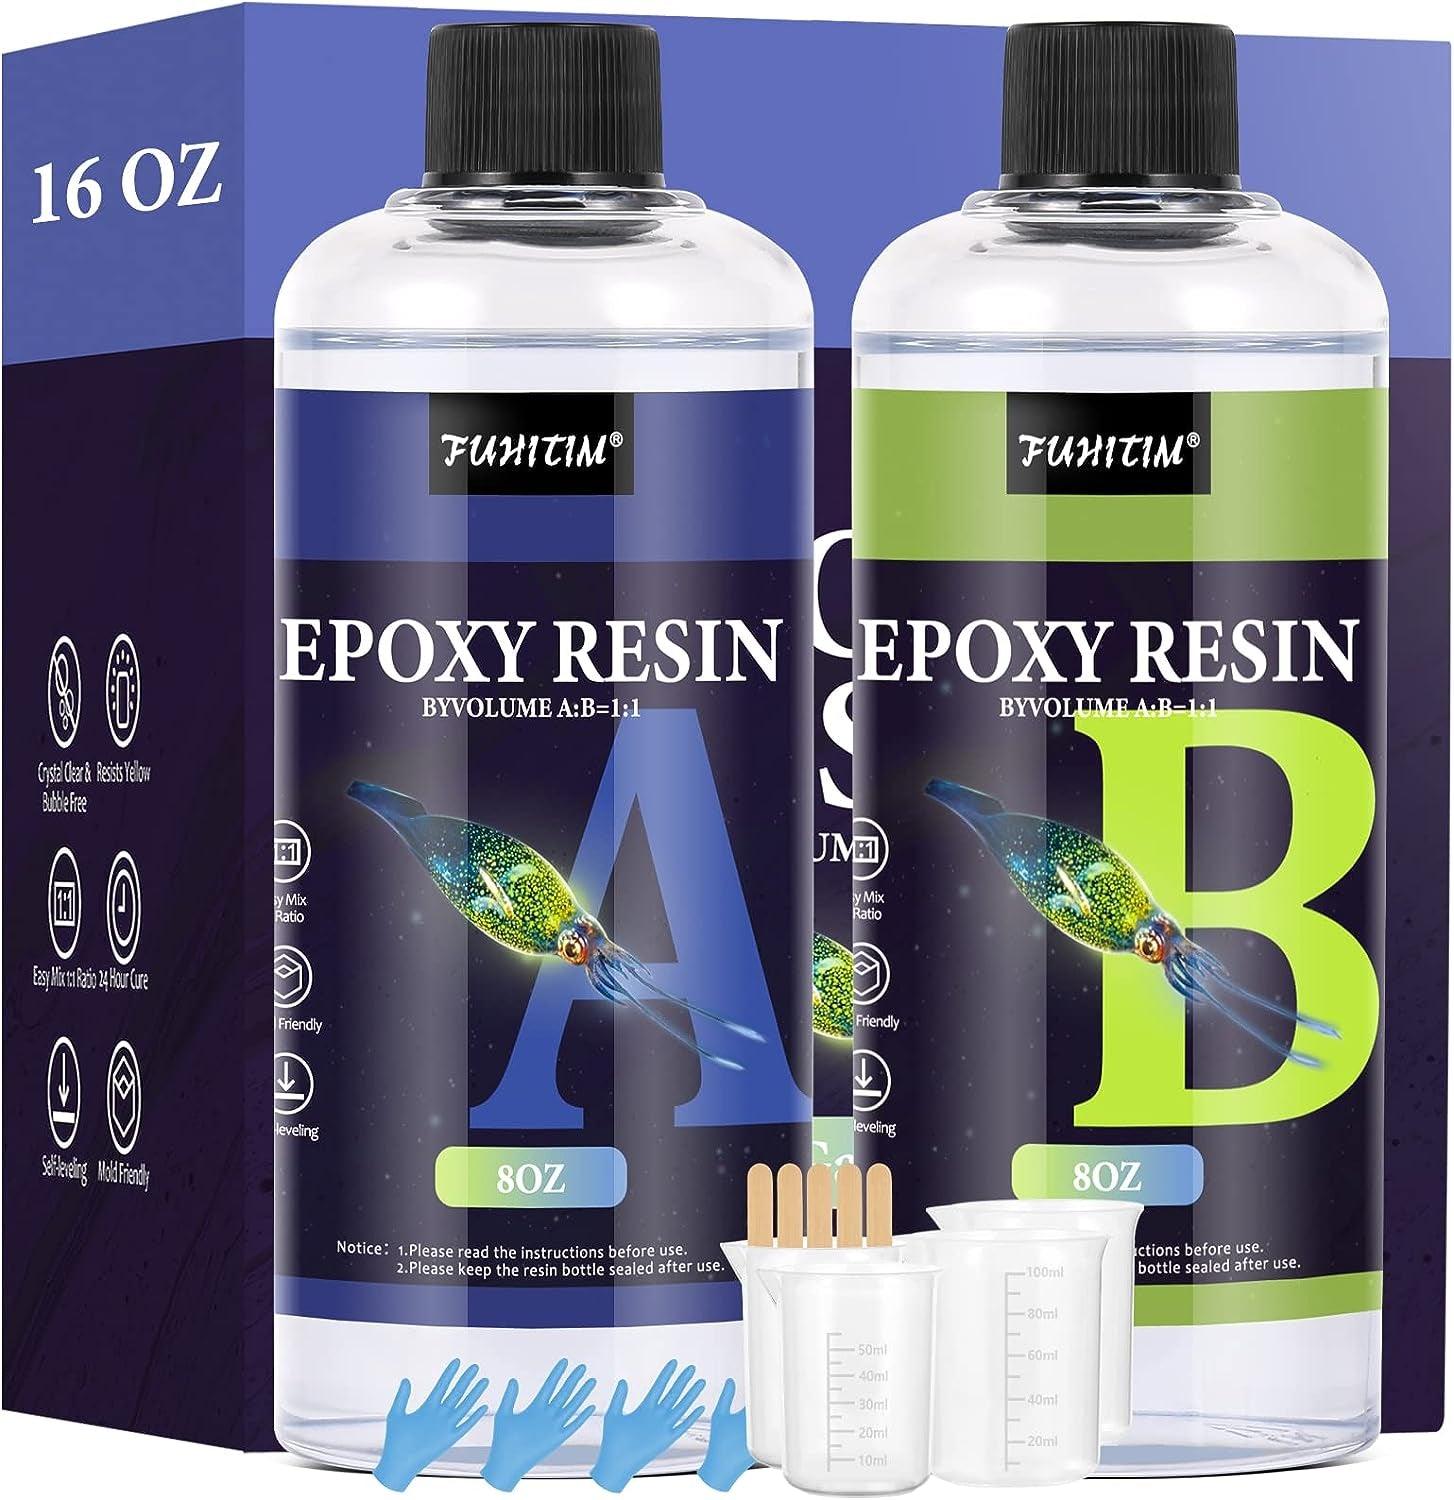  Teexpert Epoxy Resin Kit 16oz, Self-Leveling, Crystal